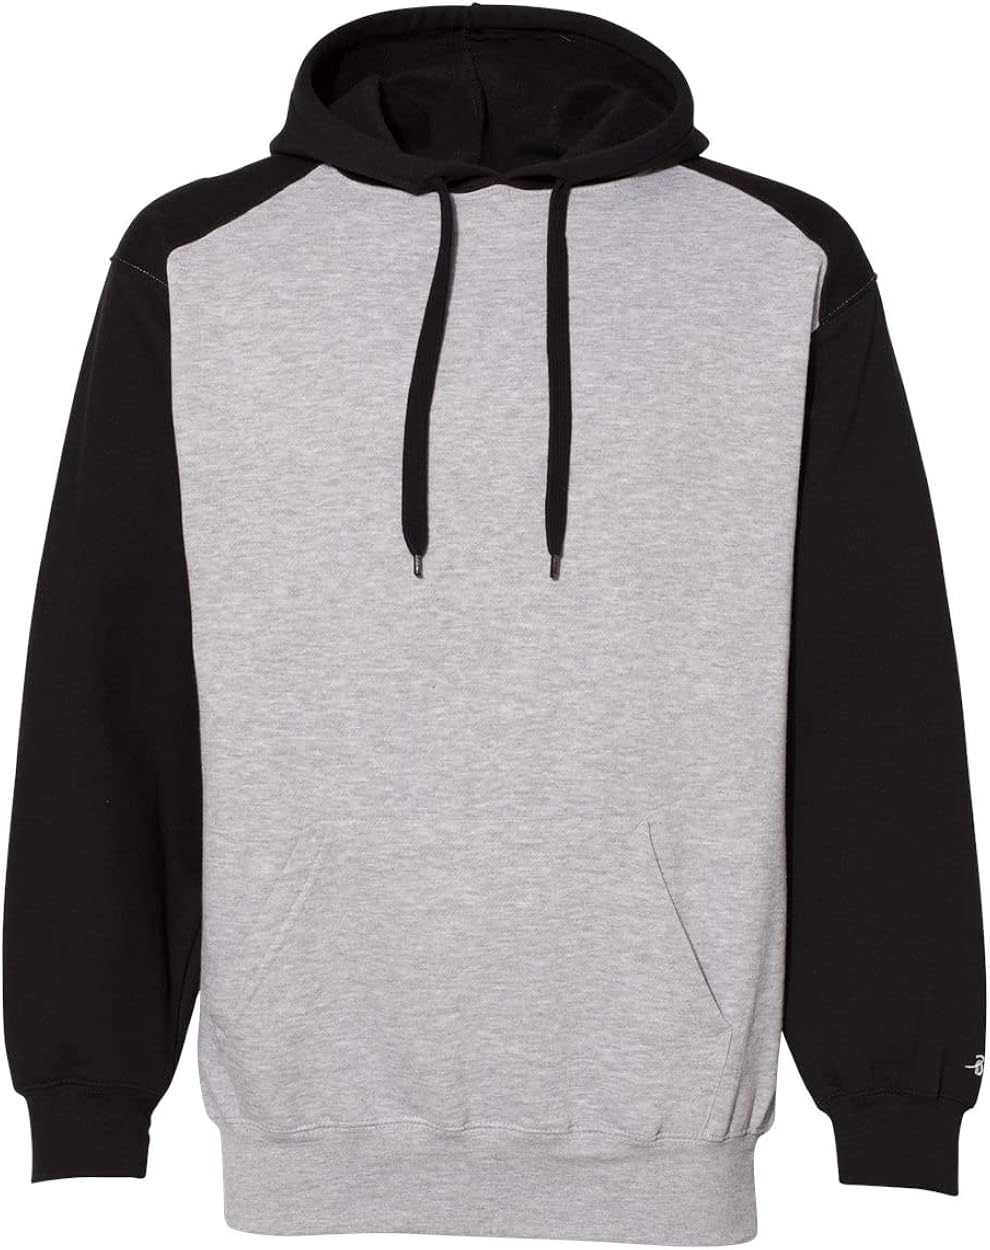 Mens Sport Athletic Fleece Hooded Sweatshirt 1249 -OxfordBLA -L